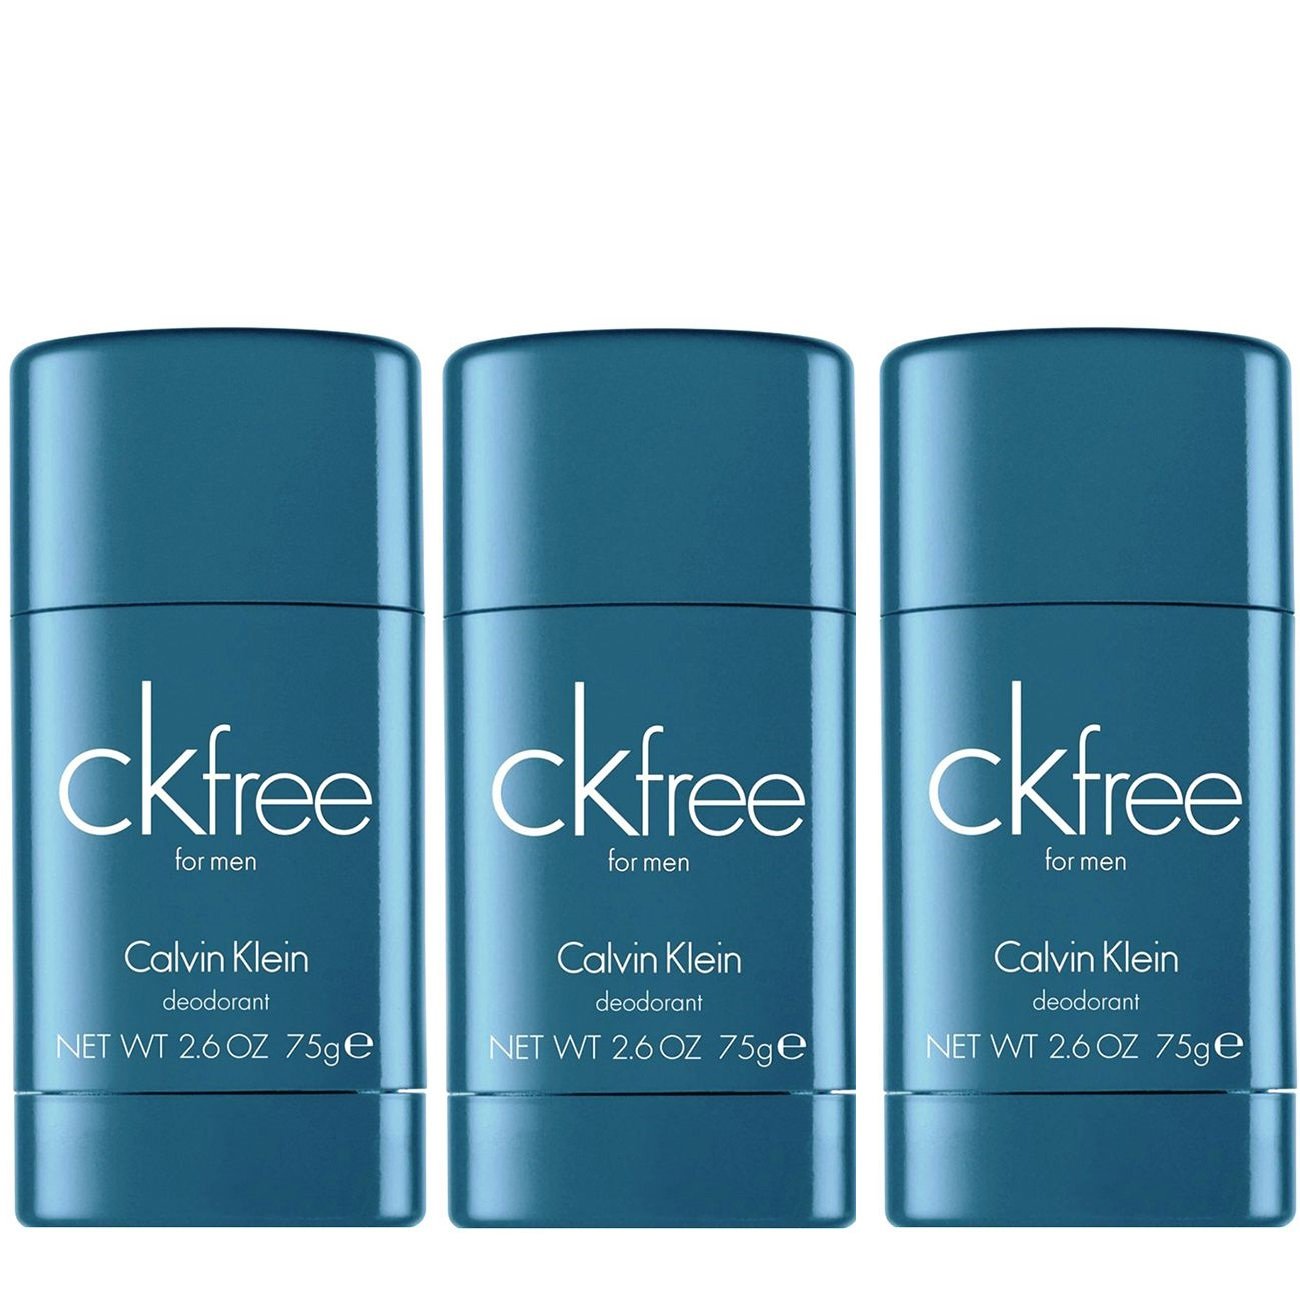 Calvin Klein - 3x CK Free Deodorant Stick